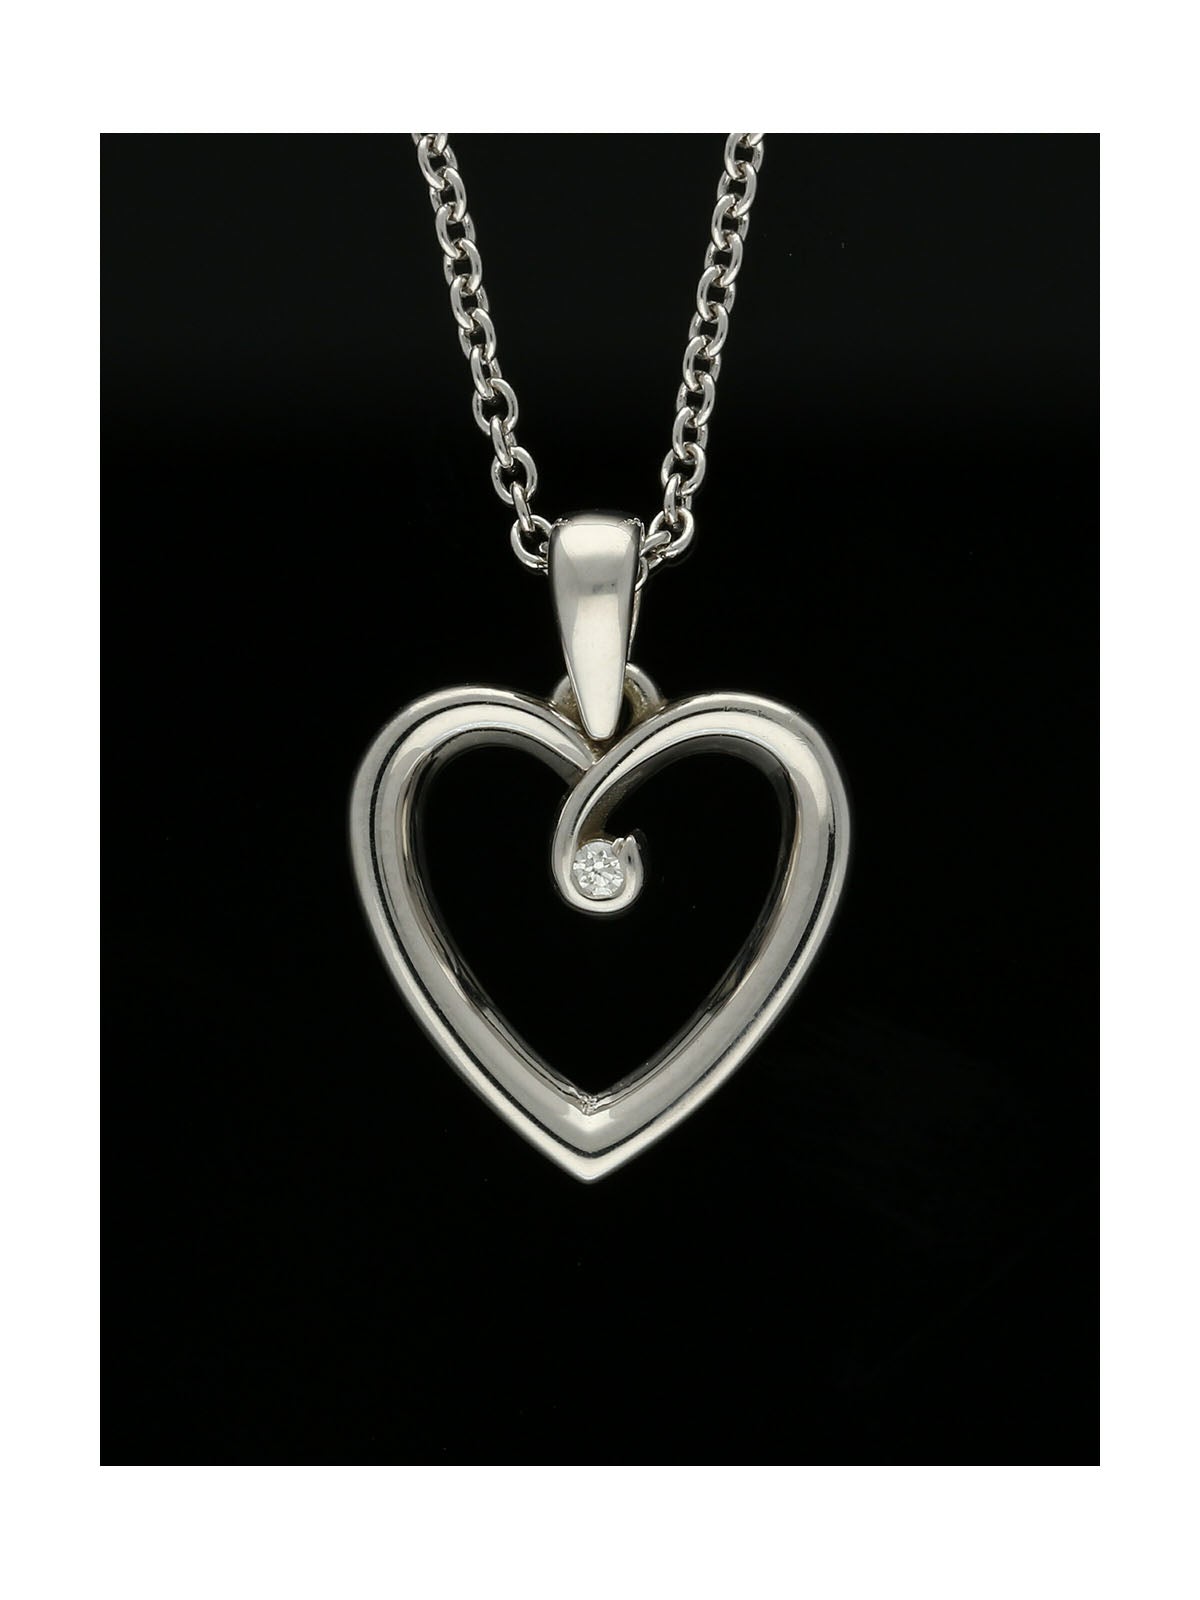 Diamond Heart Pendant Necklace in 9ct White Gold